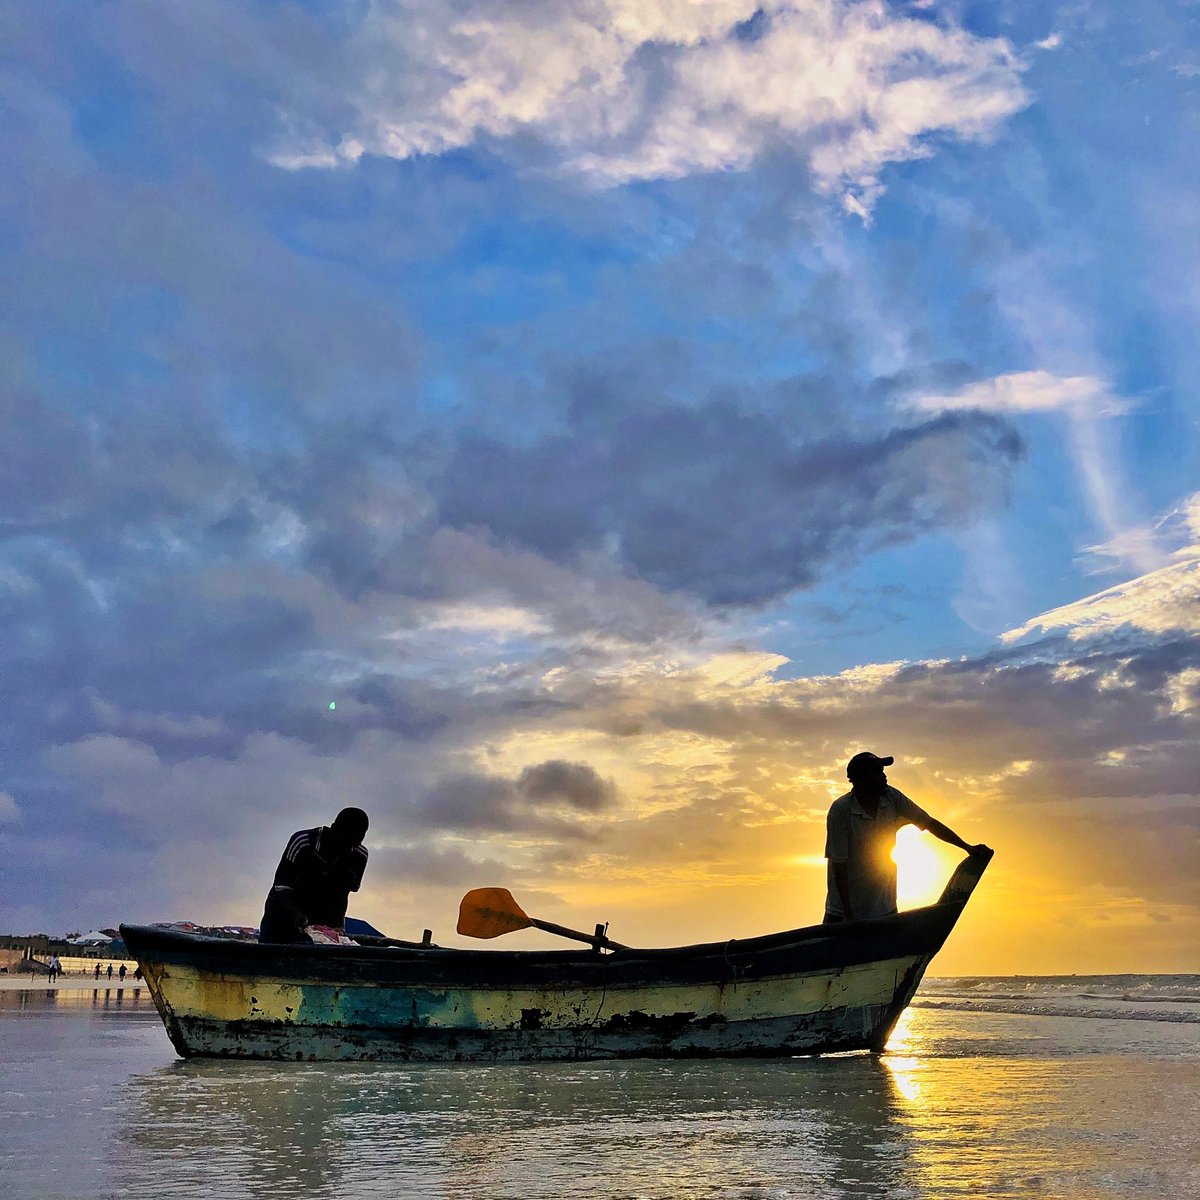 #HappyWorldOceansDay from the beautiful blue Indian Ocean coast of Somalia, Africa's longest. #LiidoBeach